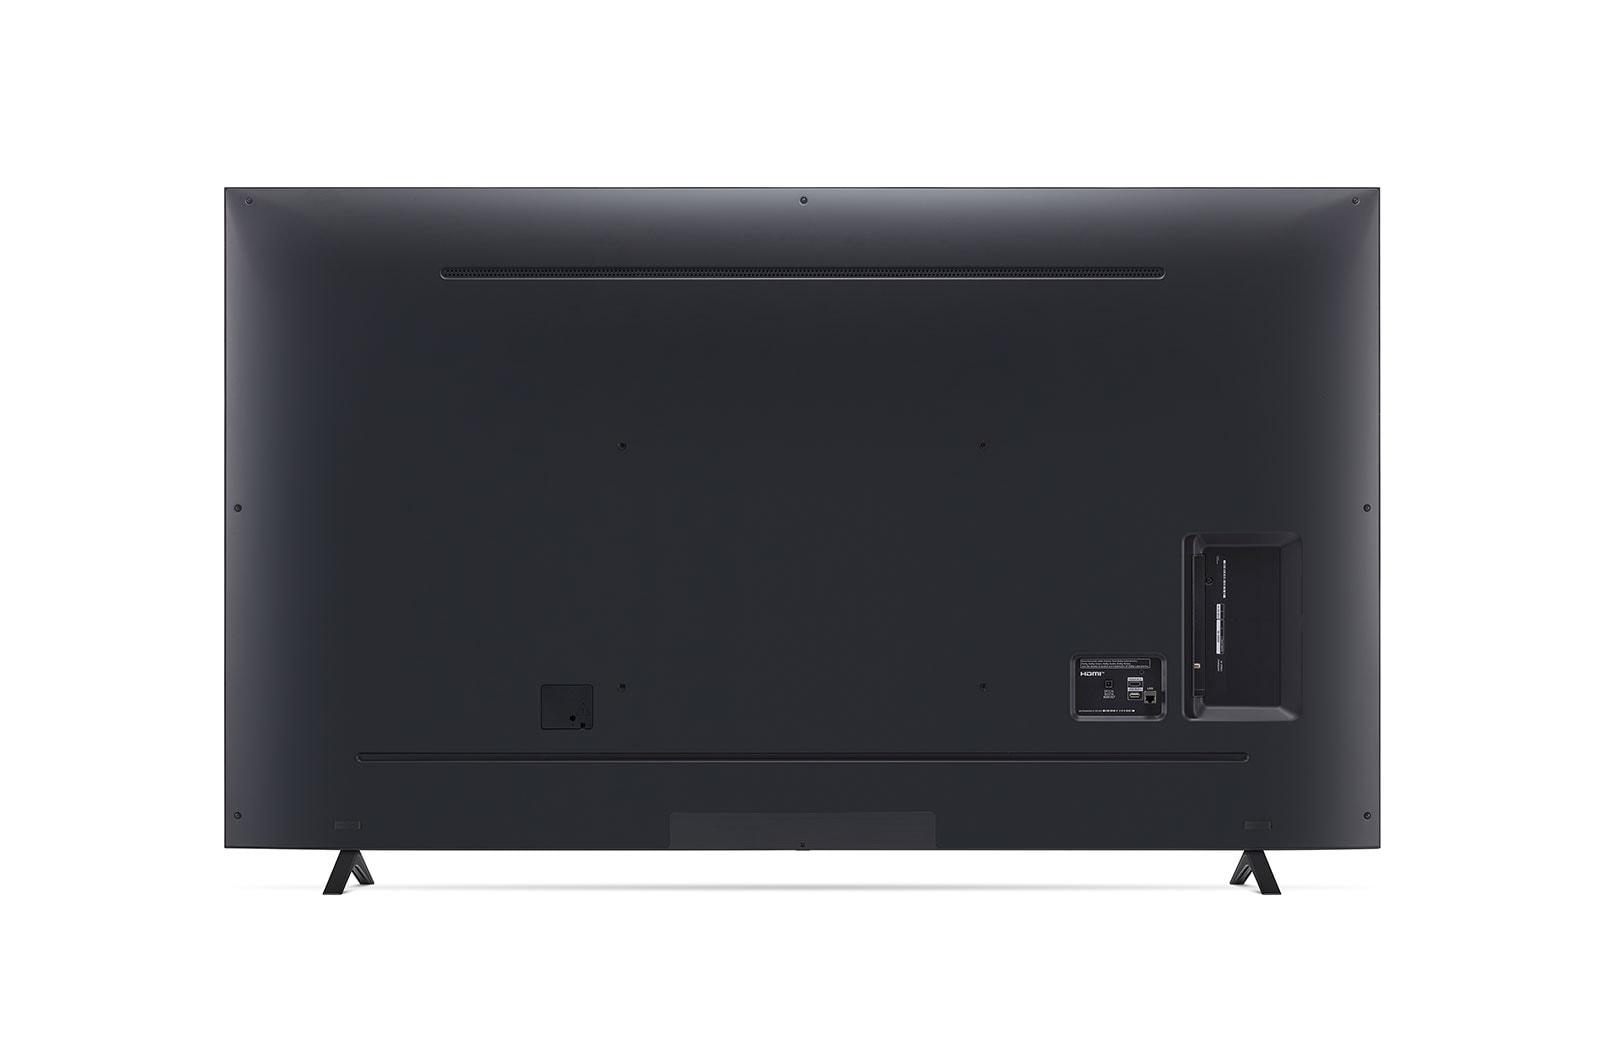 LG 75 Inch Class NANO75 UQA series LED 4K UHD Smart webOS 22 w/ ThinQ AI TV